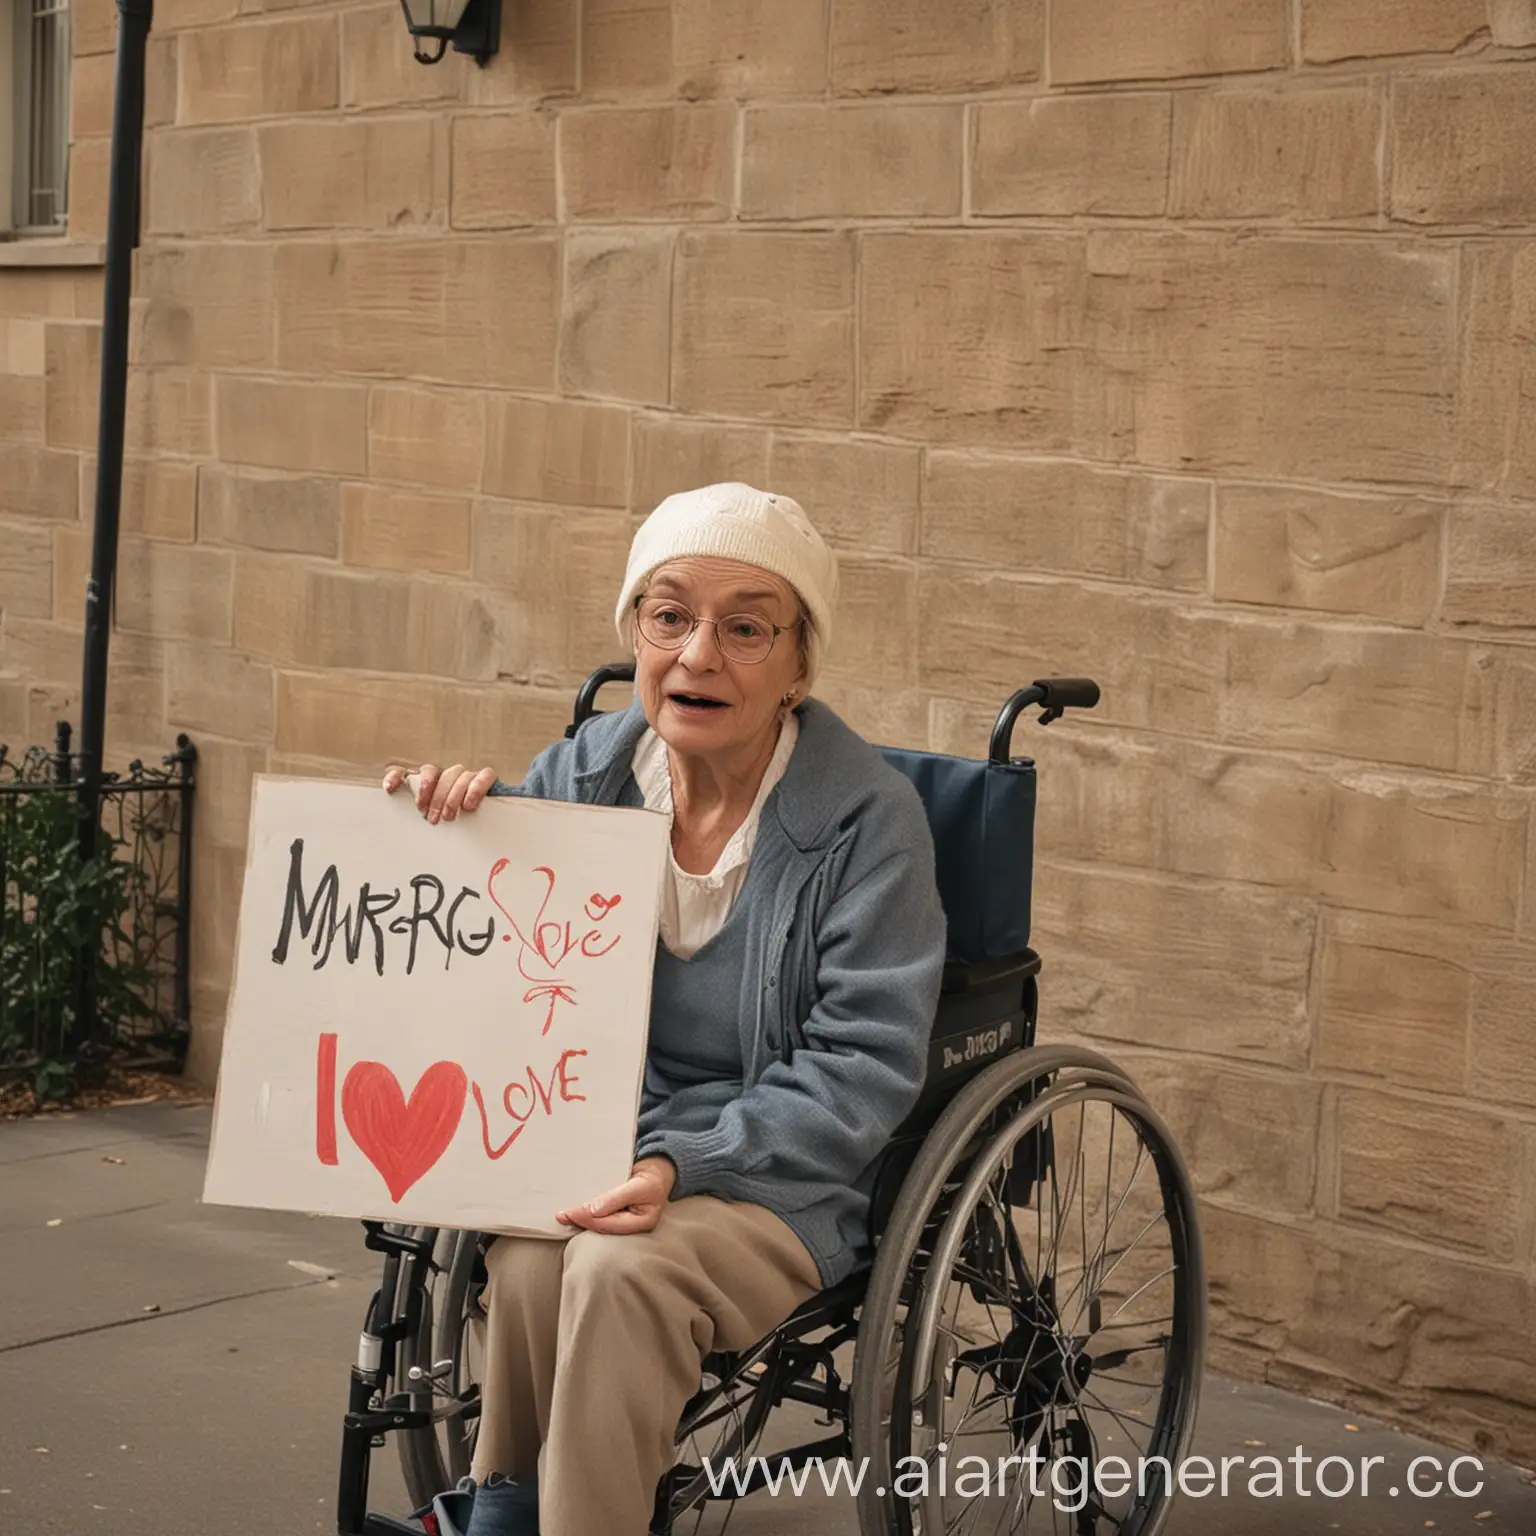 инвалид на коляске держит табличку где написано (i love margo)
